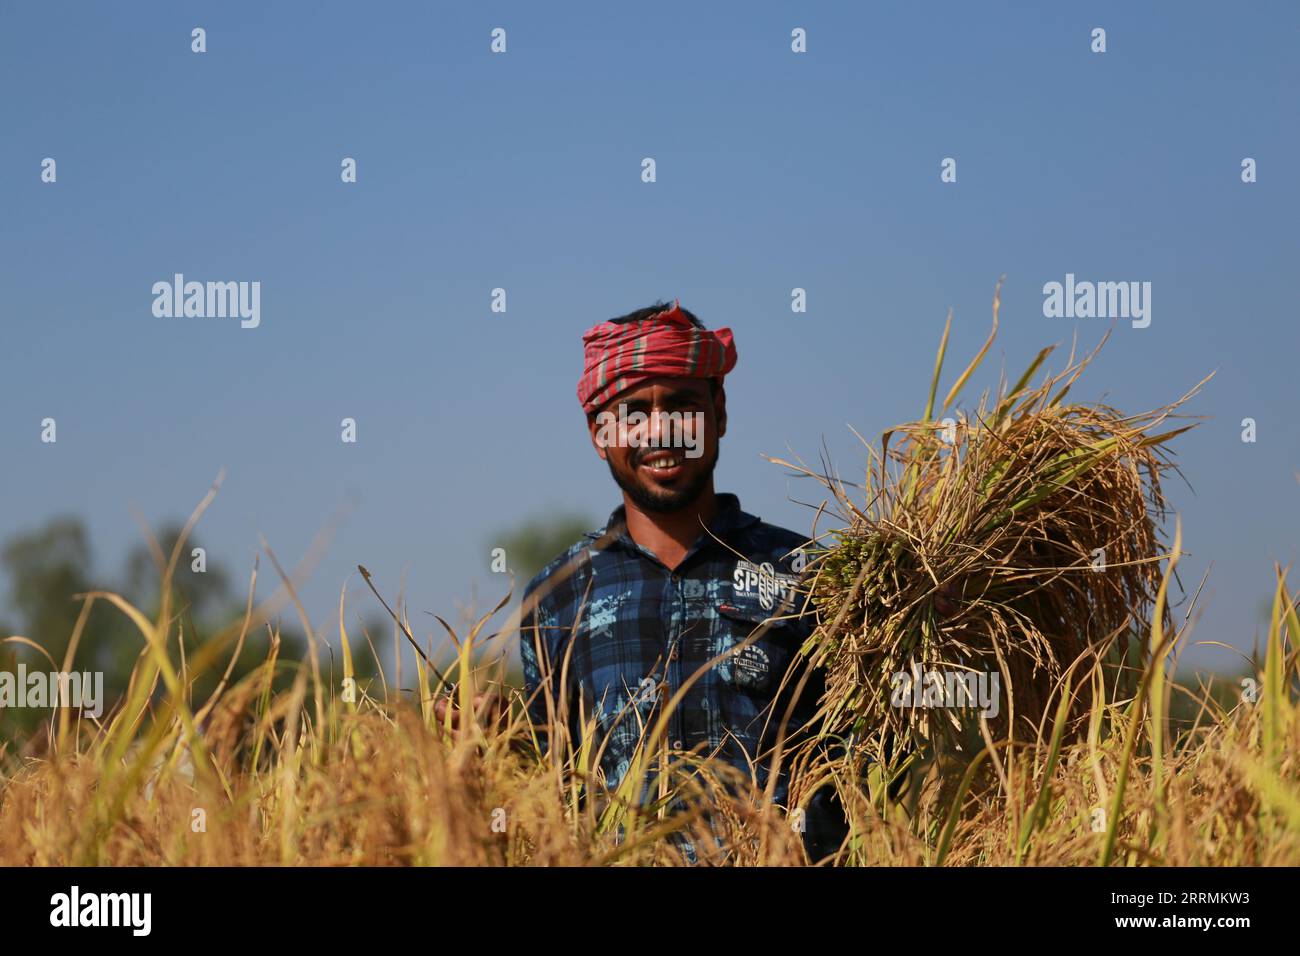 SHERPUR, BANGLADESH- DECEMBER 1, 2021: A farmer poses as he holds paddy during harvesting in Sherpur, Bangladesh on December 1, 2021. Stock Photo